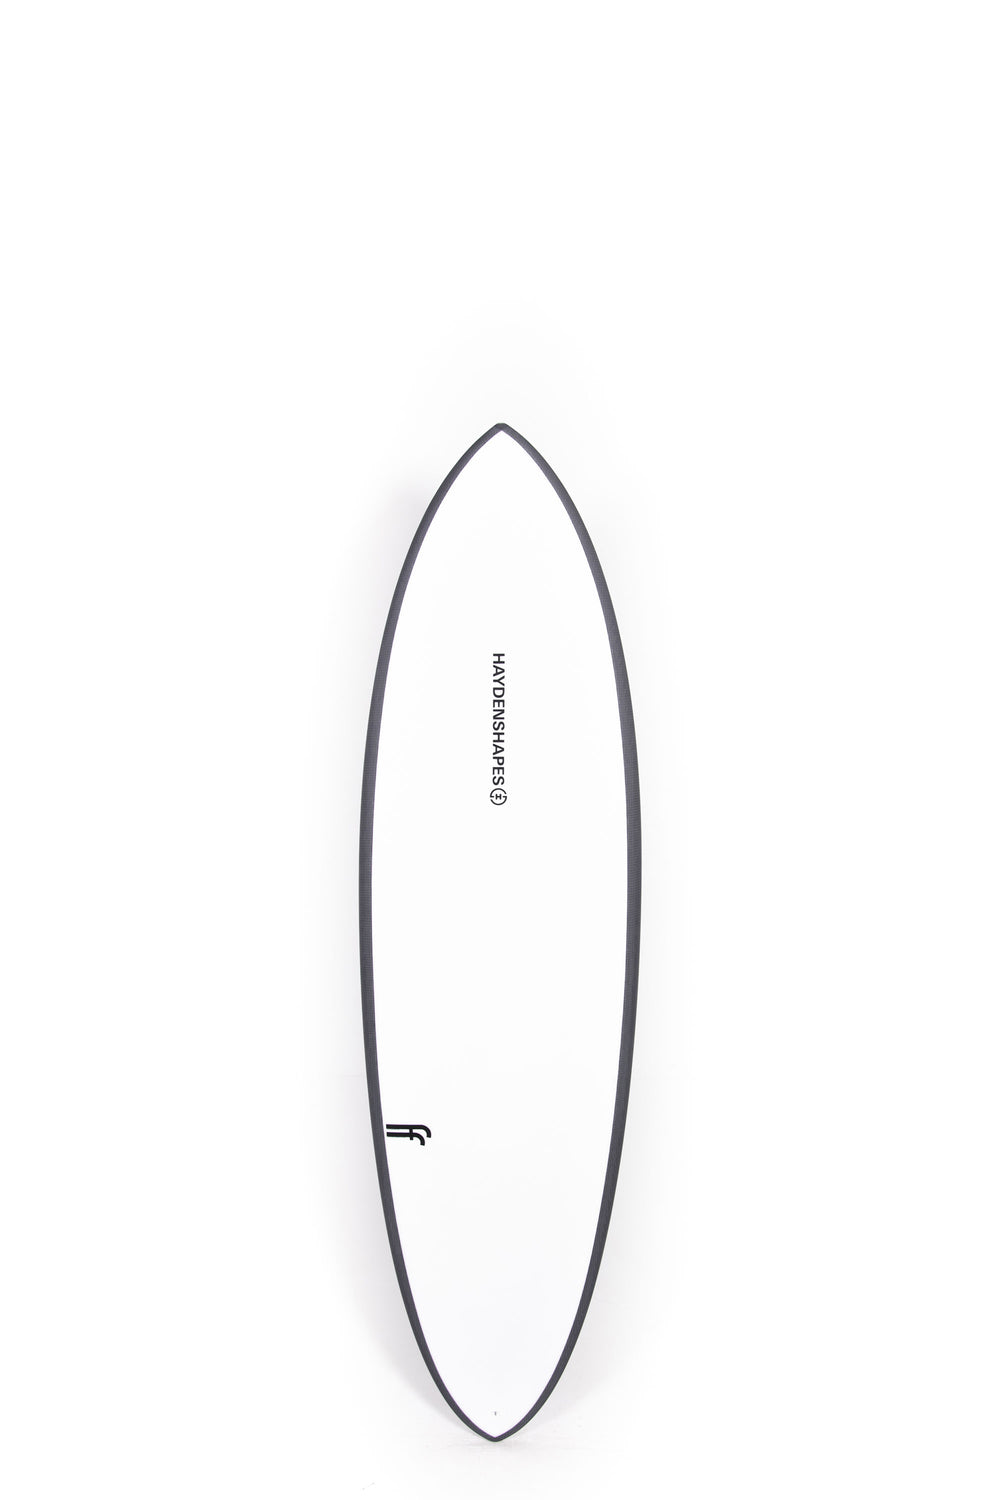 Pukas-Surf-Shop-HS-Surfboards-Hypto-Krypto-6_8_-01-Clear